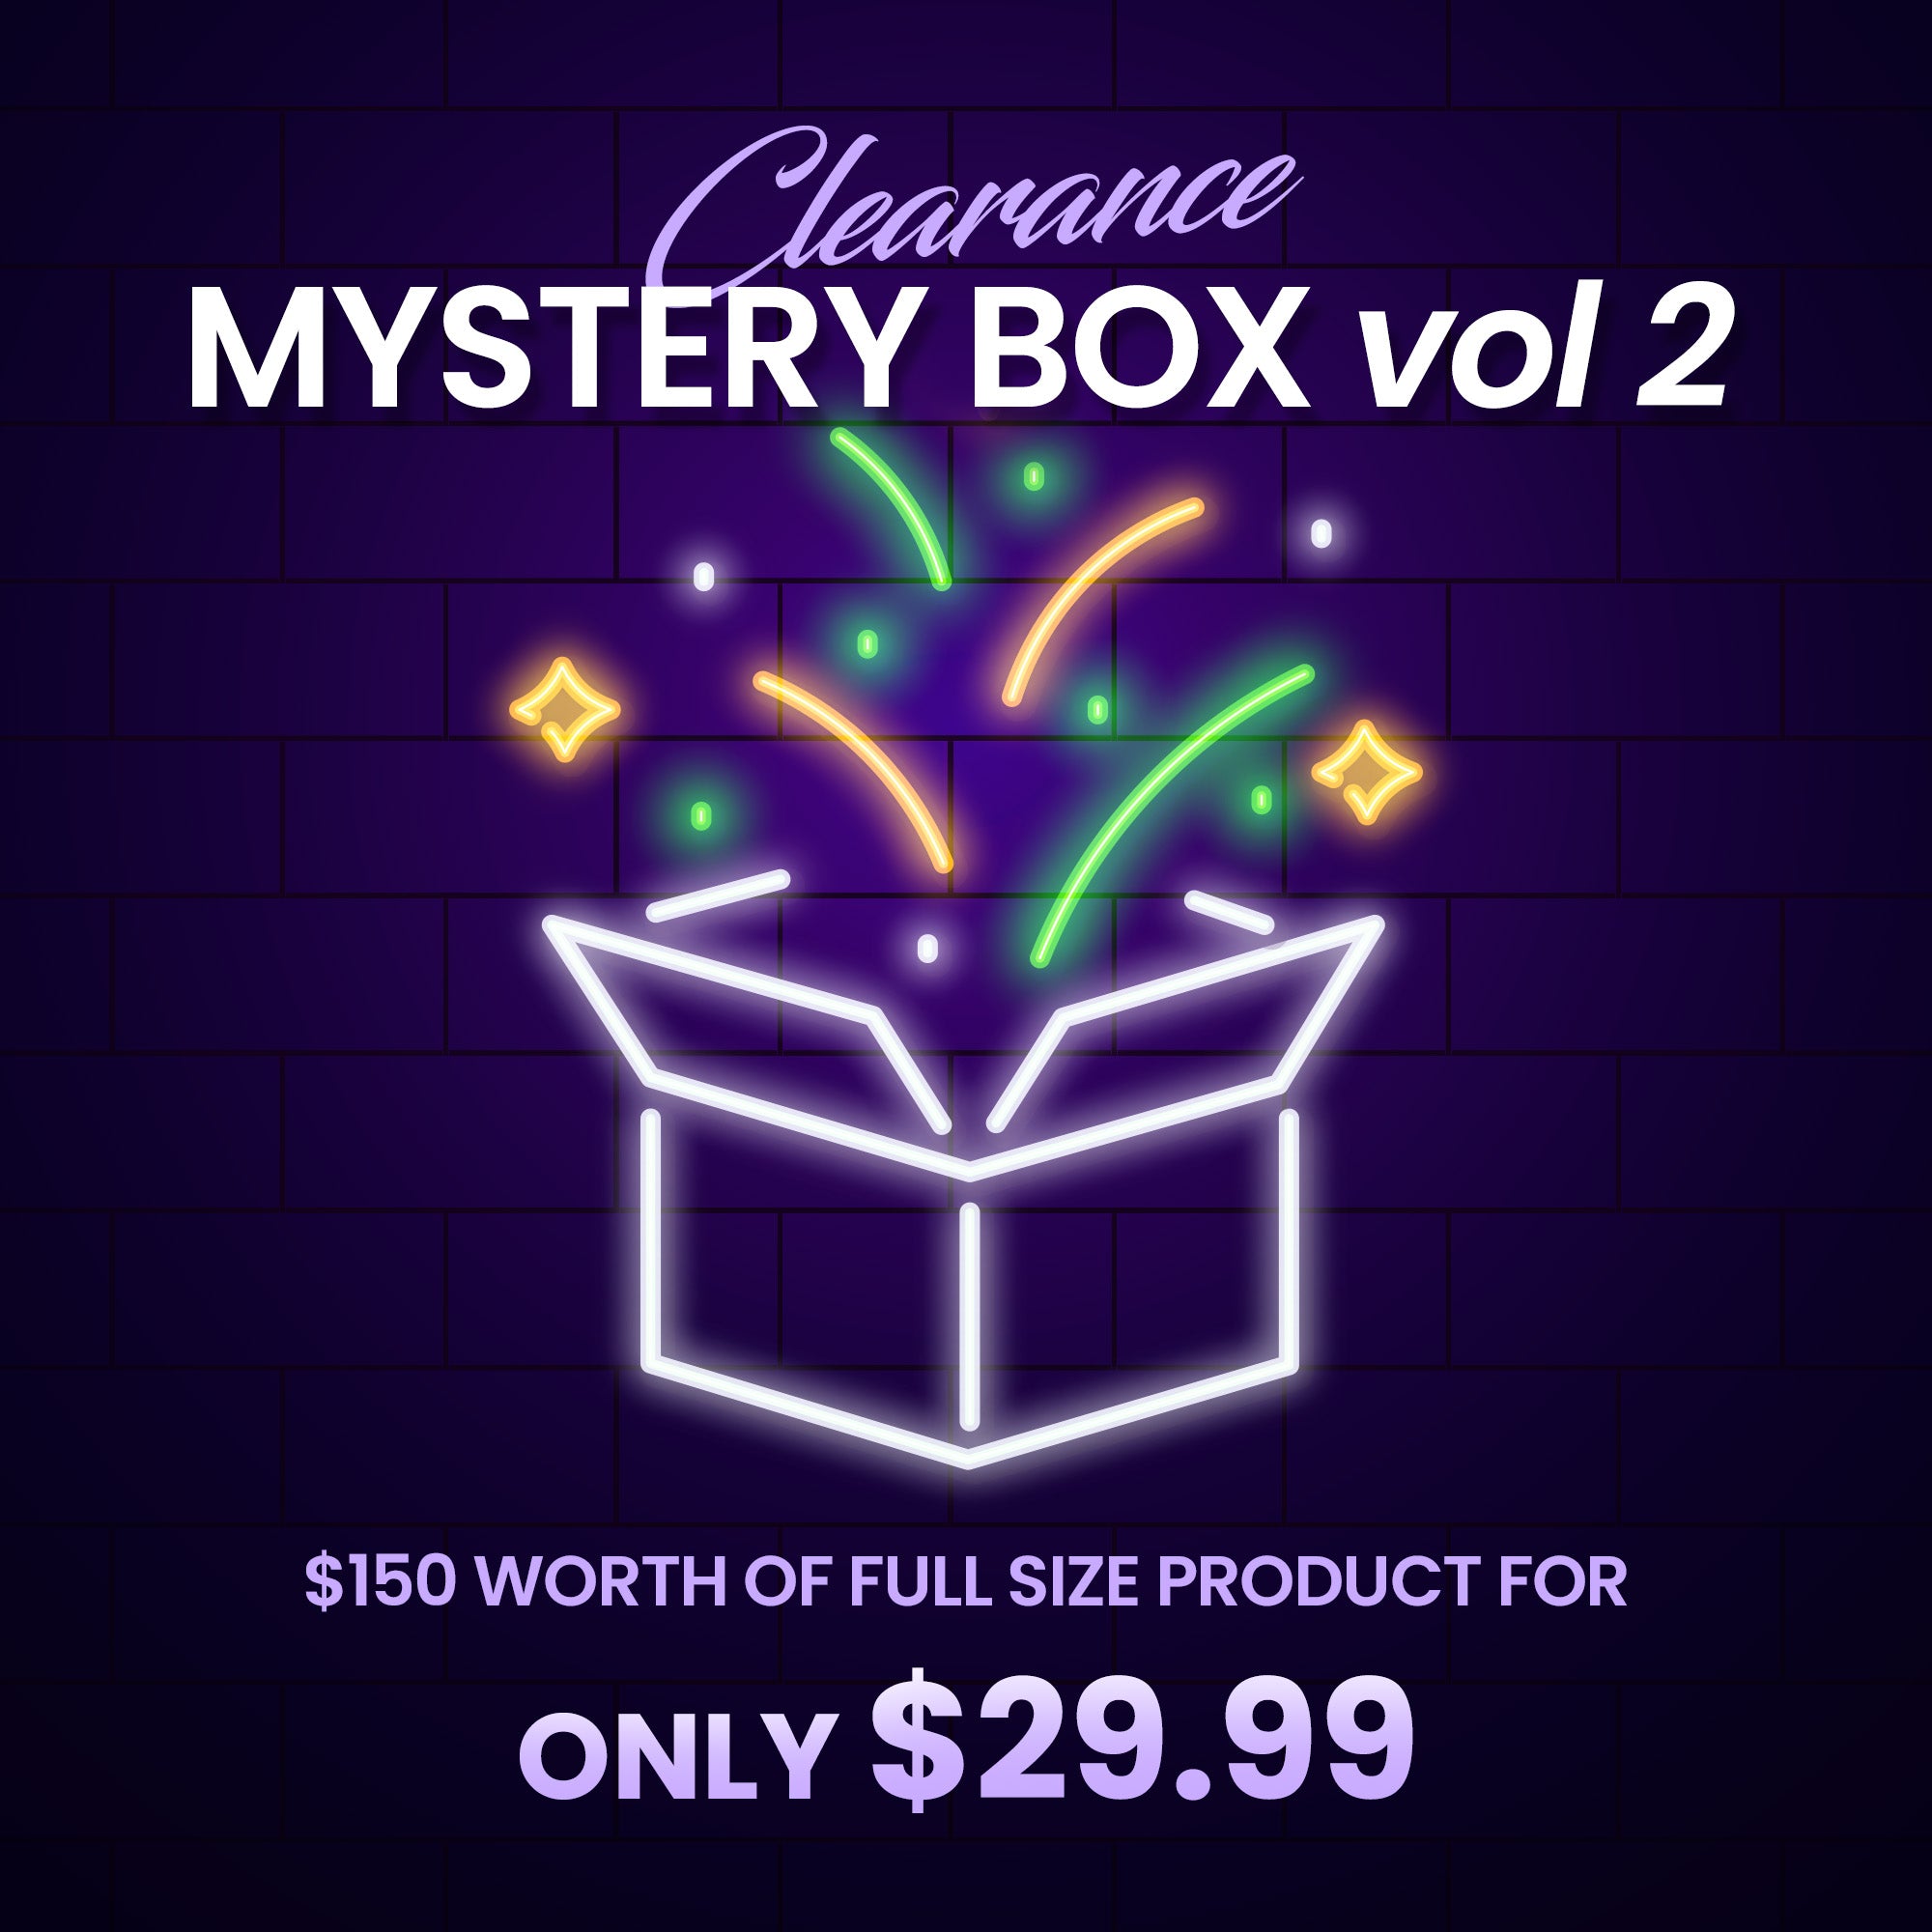 CLEARANCE MYSTERY BOX VOL.2